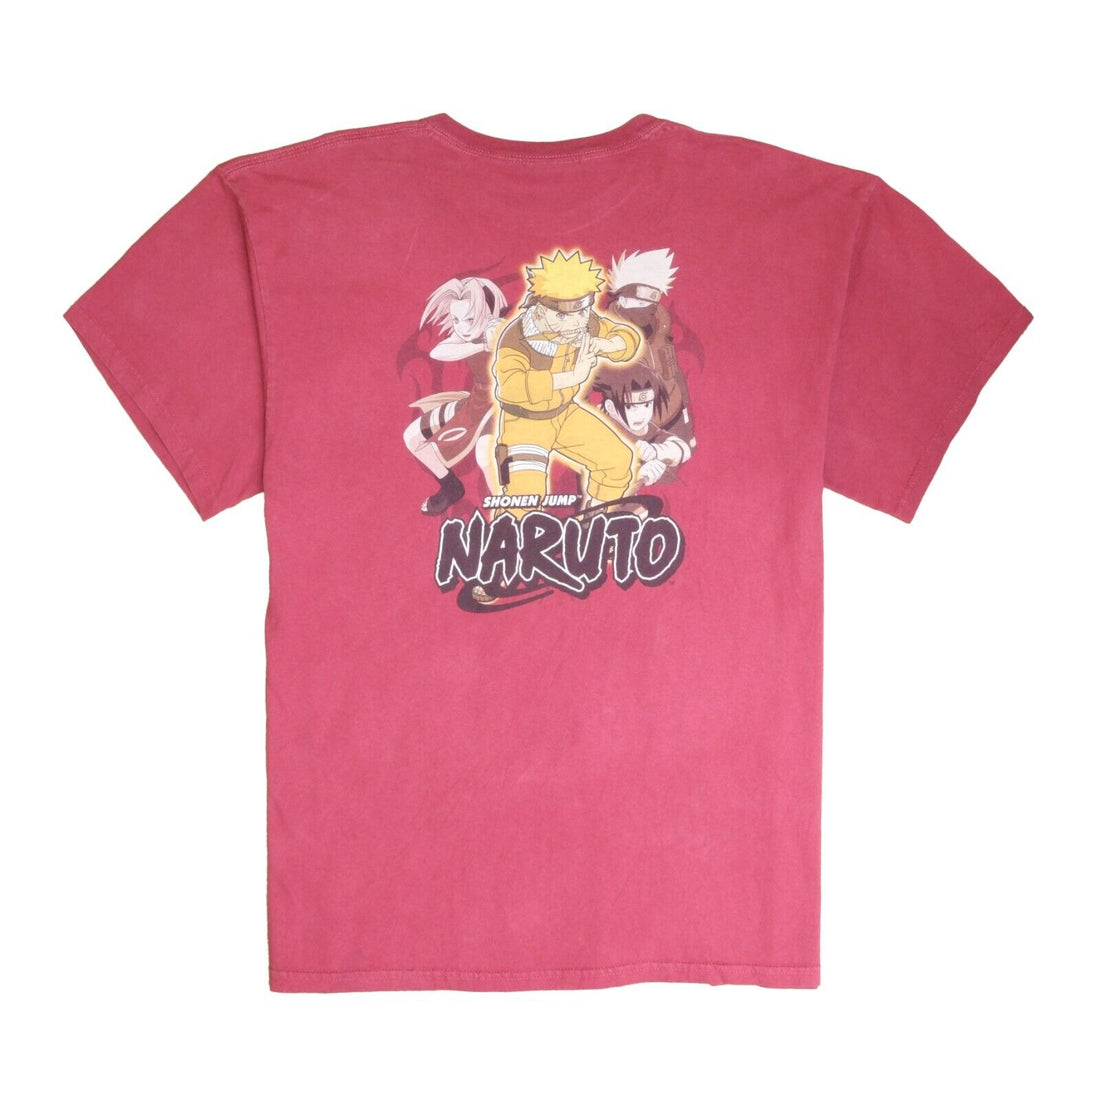 Vintage Naruto Shonen Jump T-Shirt Size XL Red Manga Anime